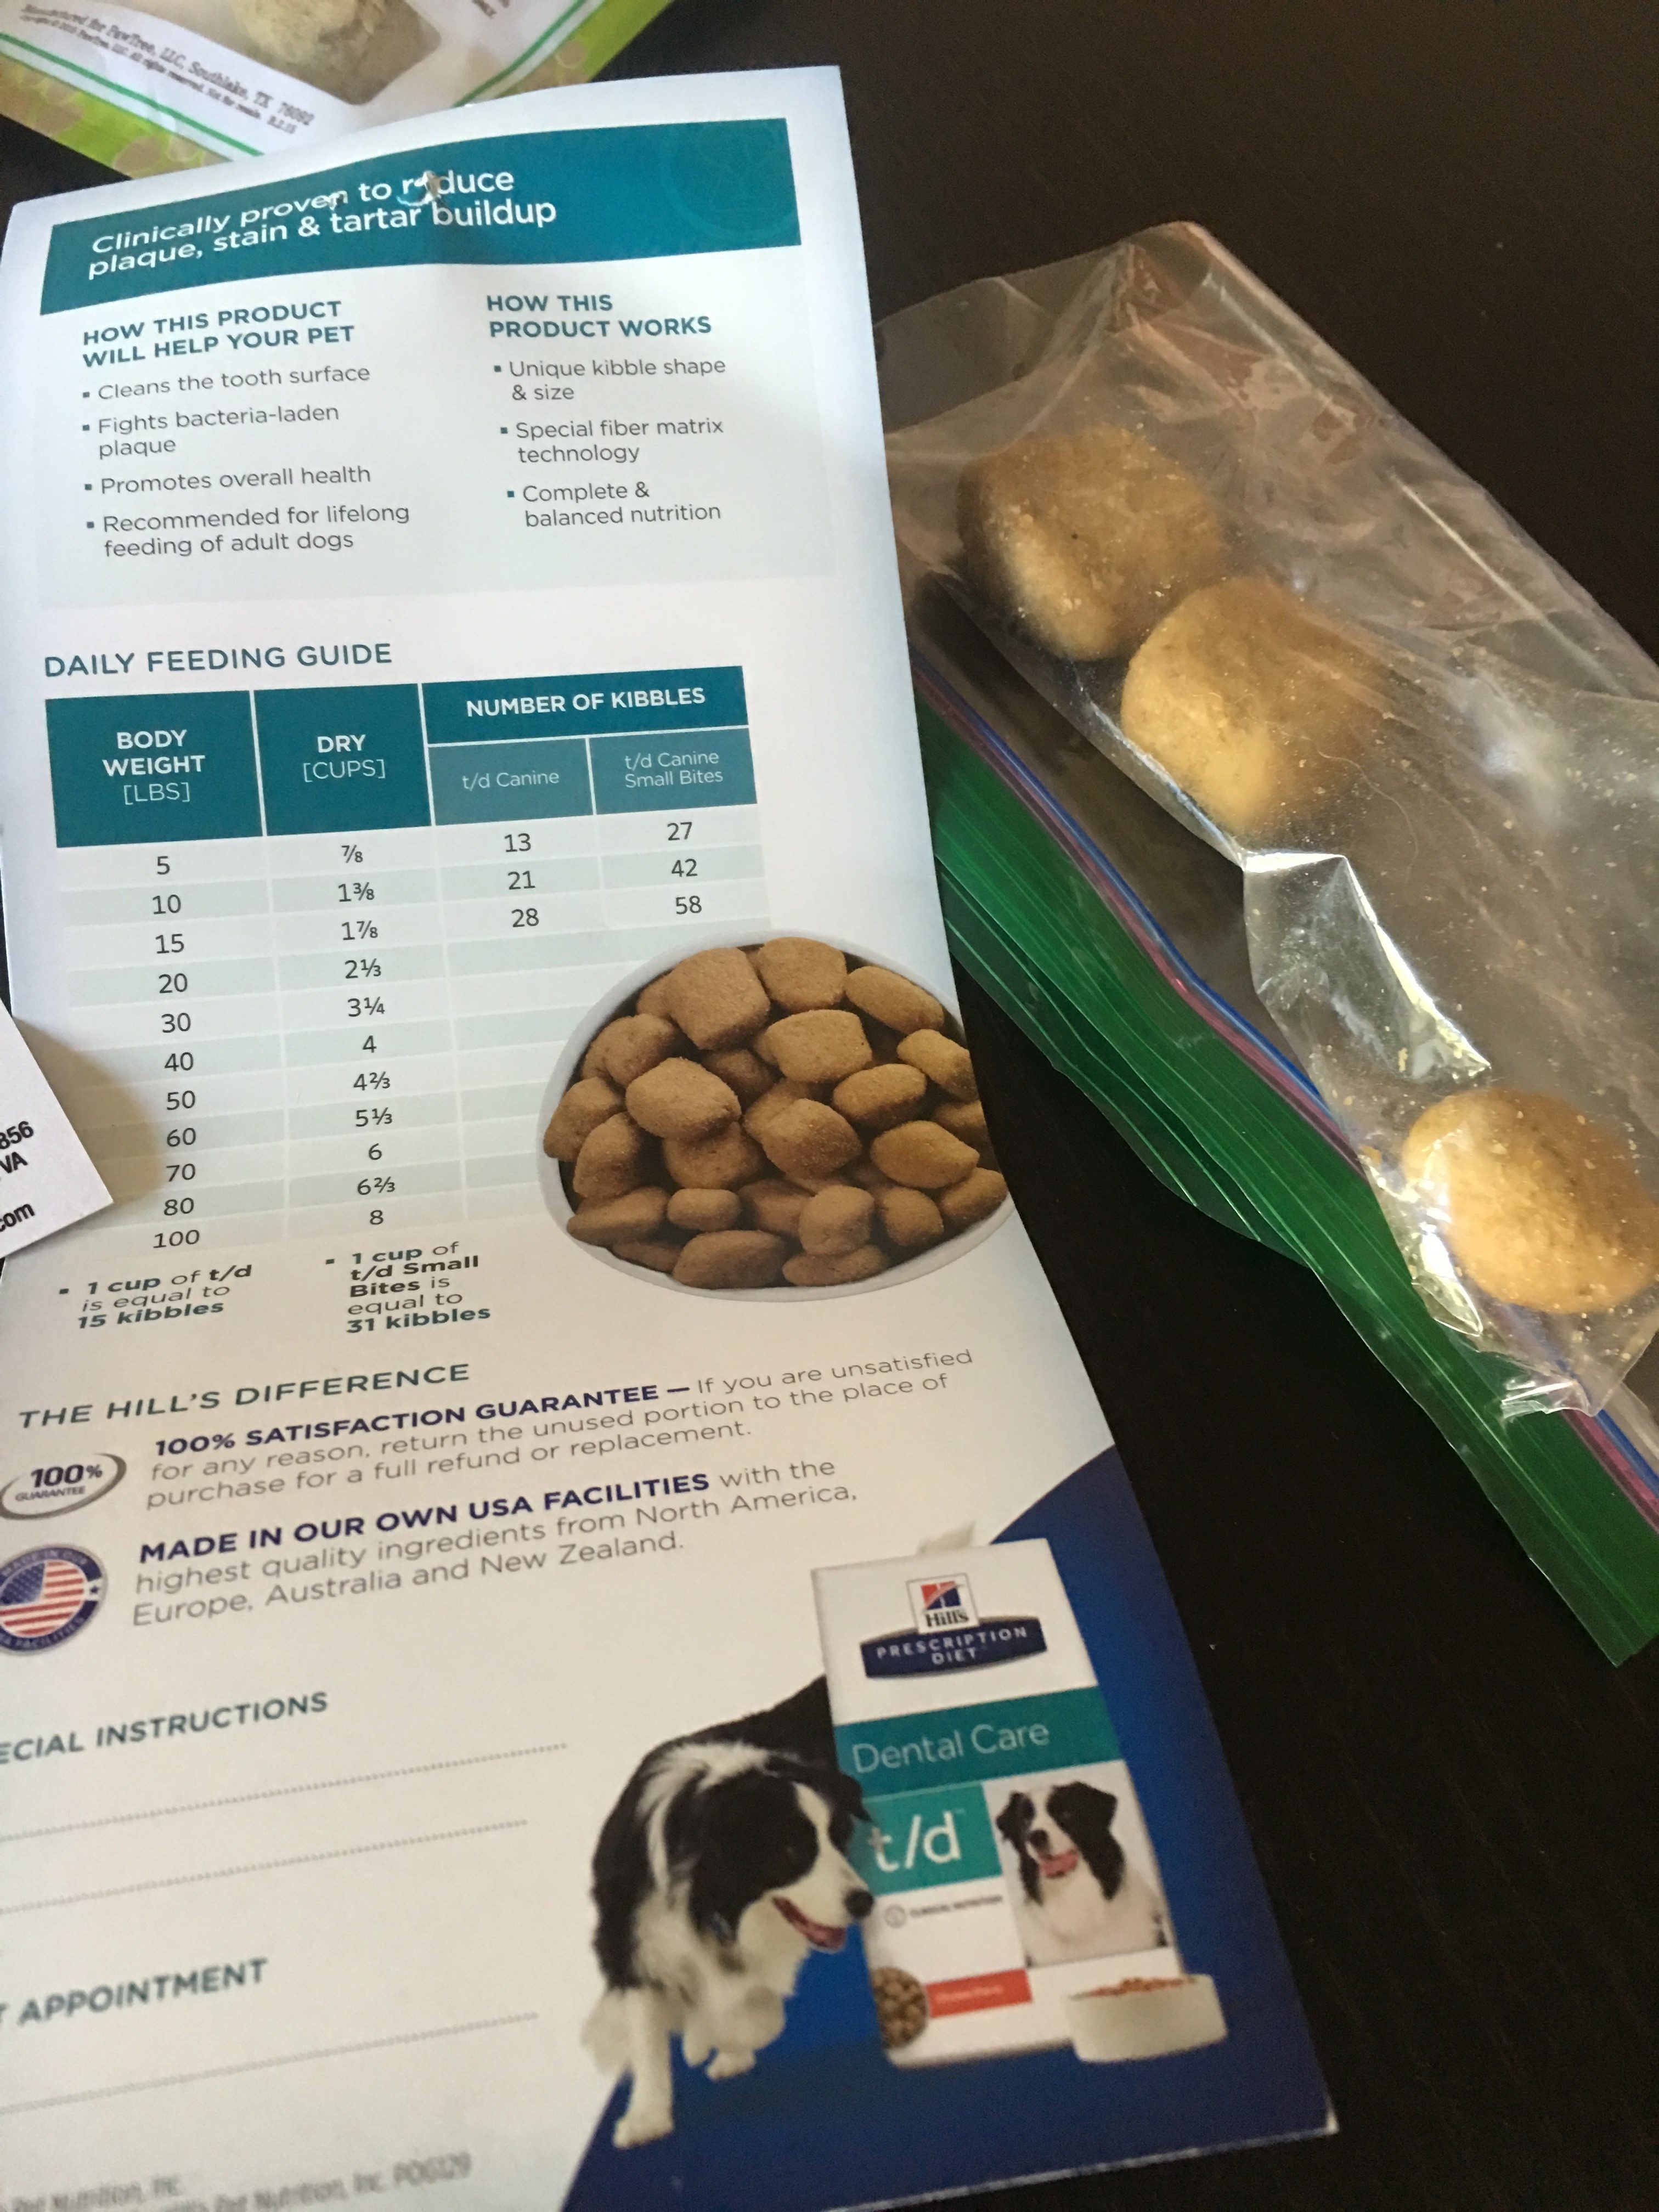 Top 179 Reviews And Complaints About Hills Pet Foods Page 2 regarding Hills Diabetic Dog Food